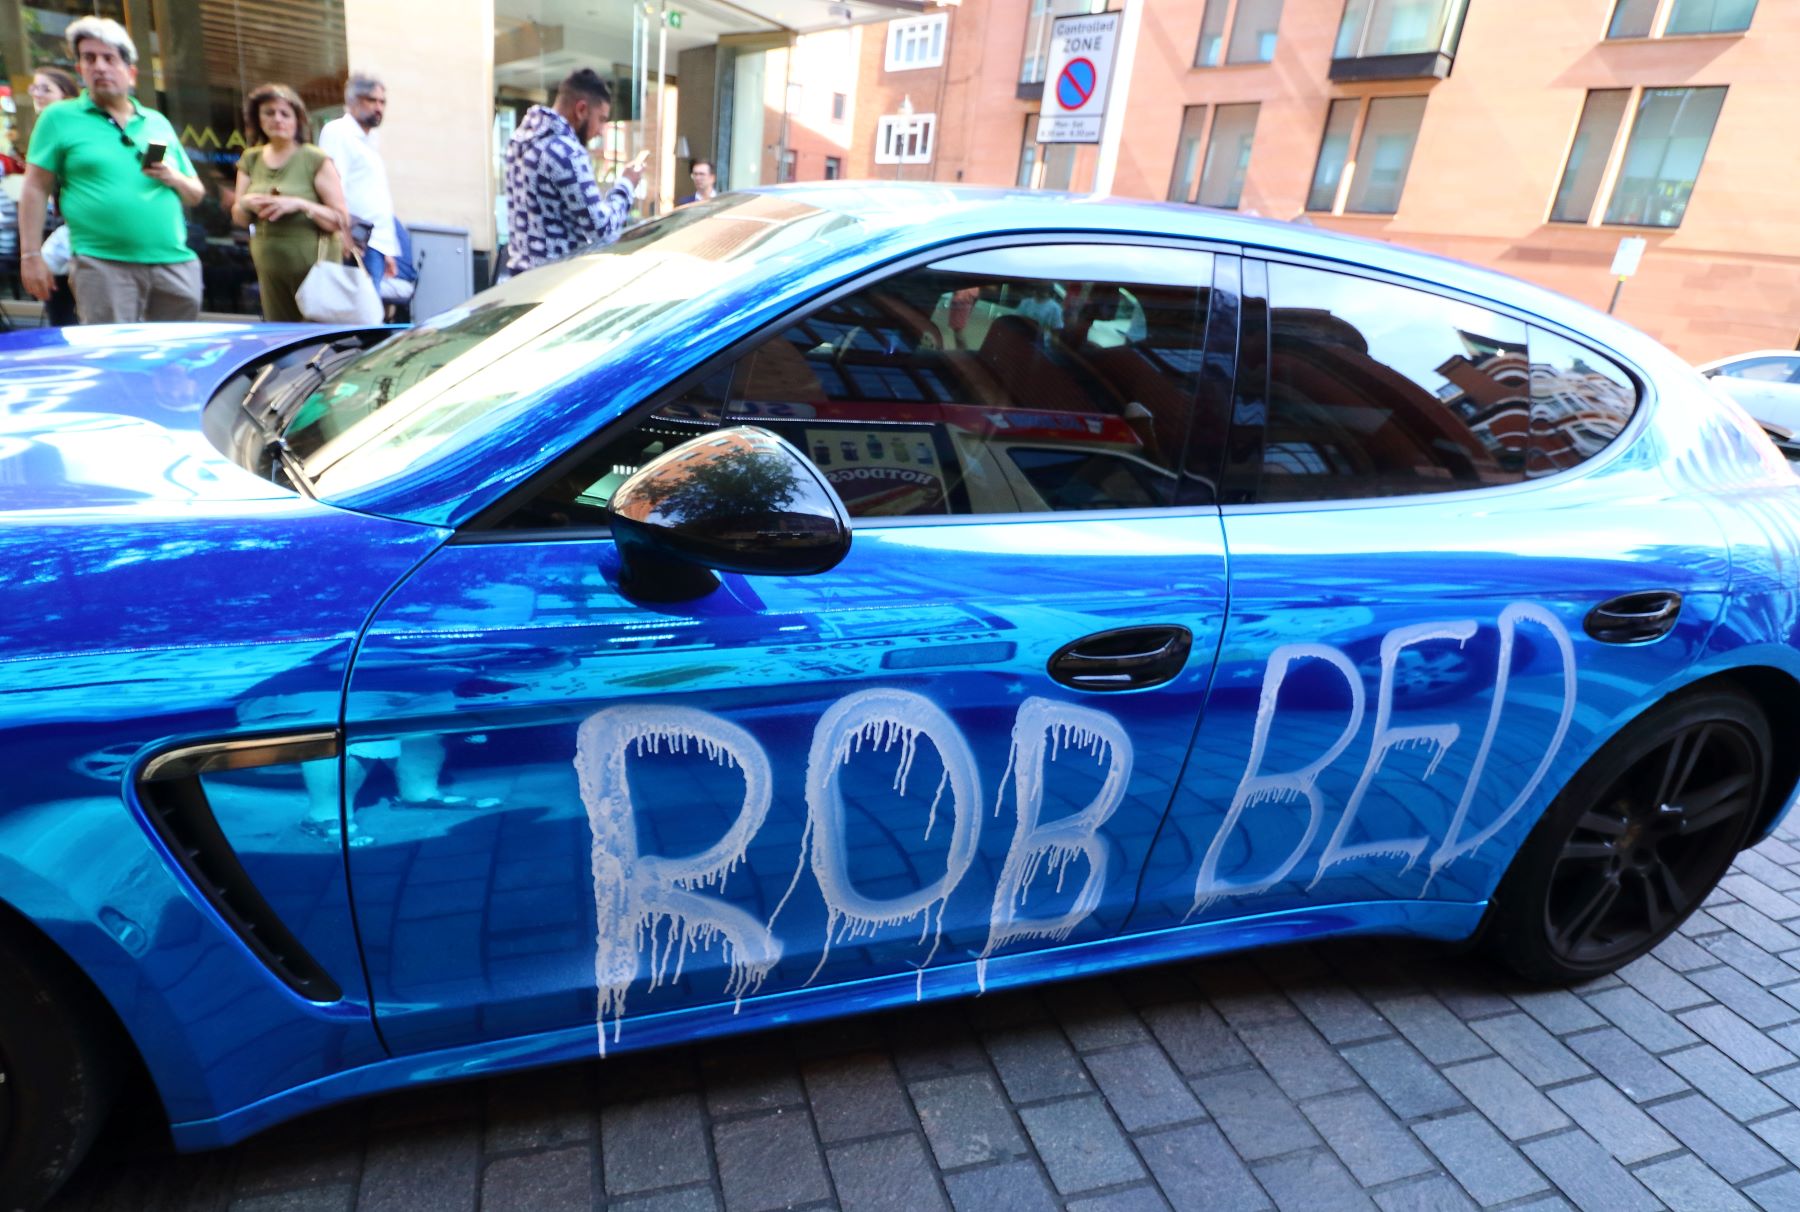 Vandalism spray paint on a blue model Porsche supercar in London, UK